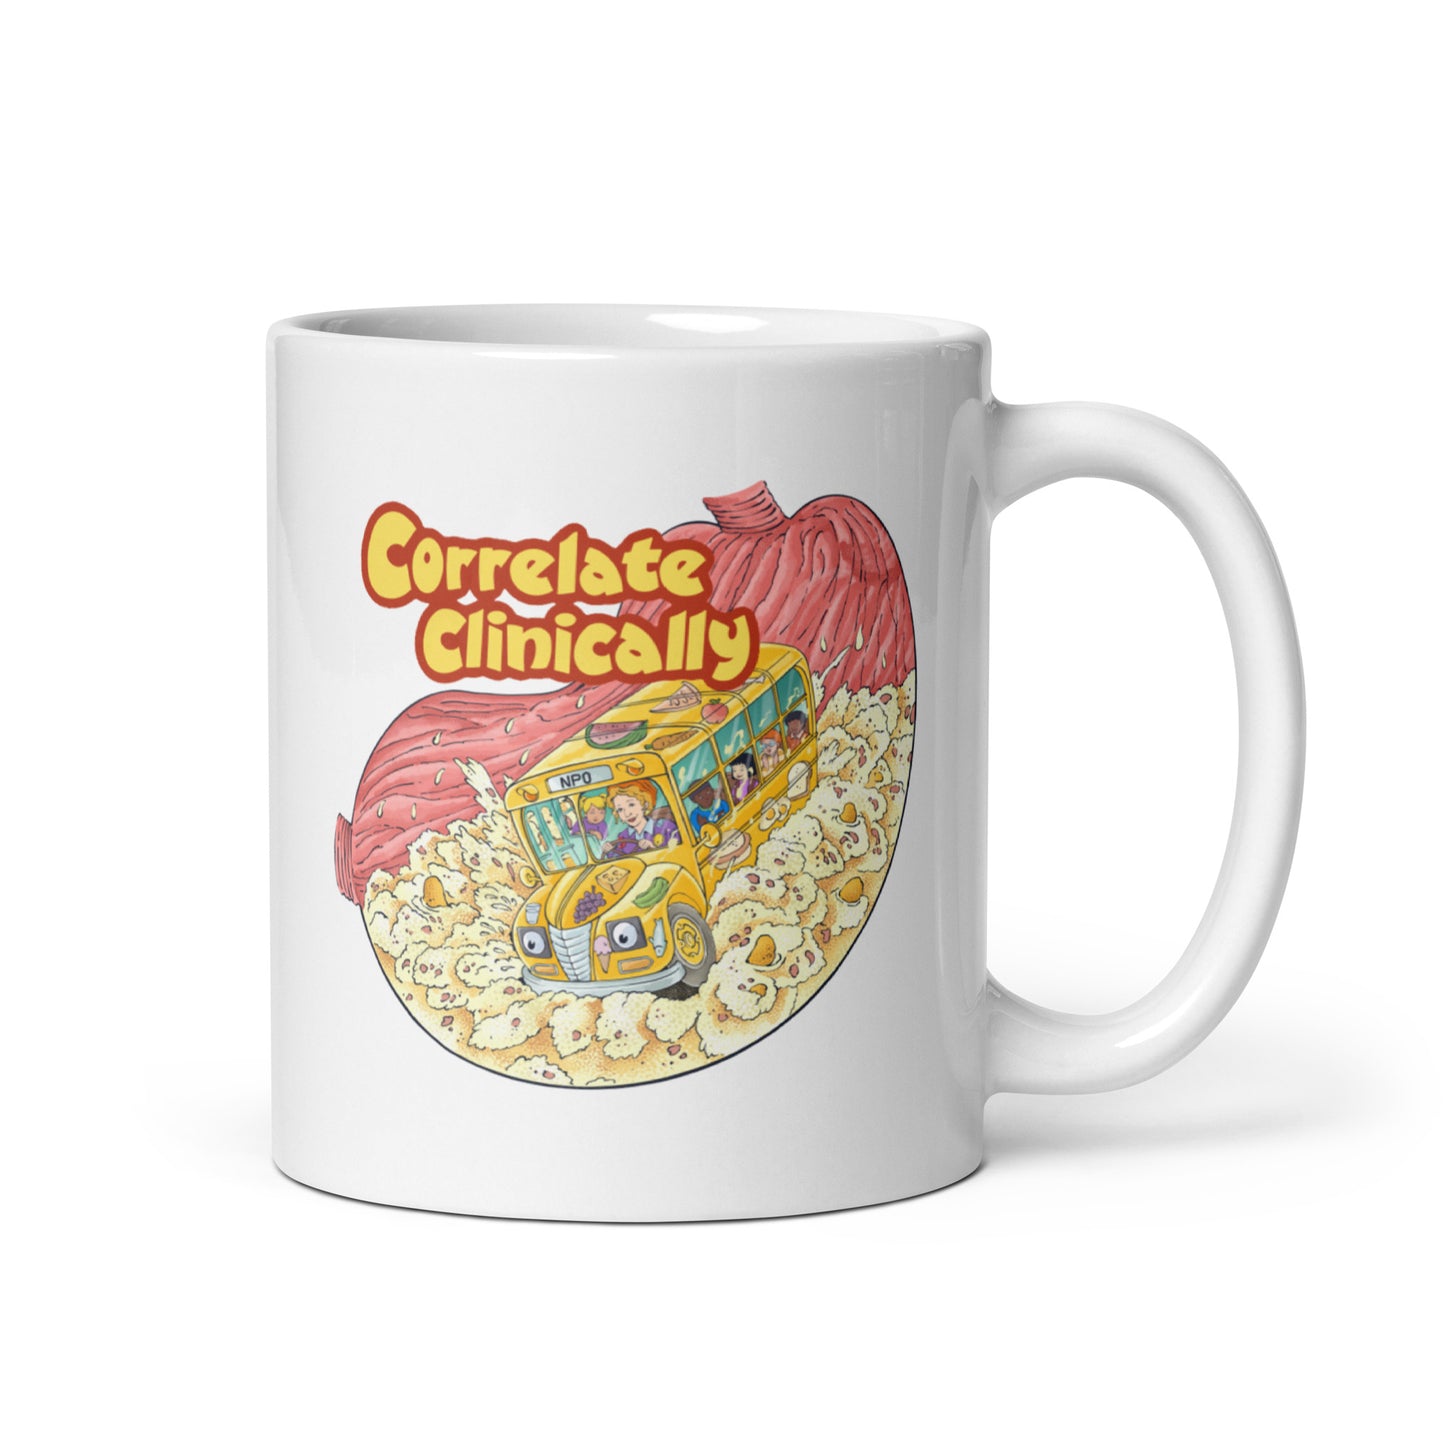 Correlate Clinically Mug